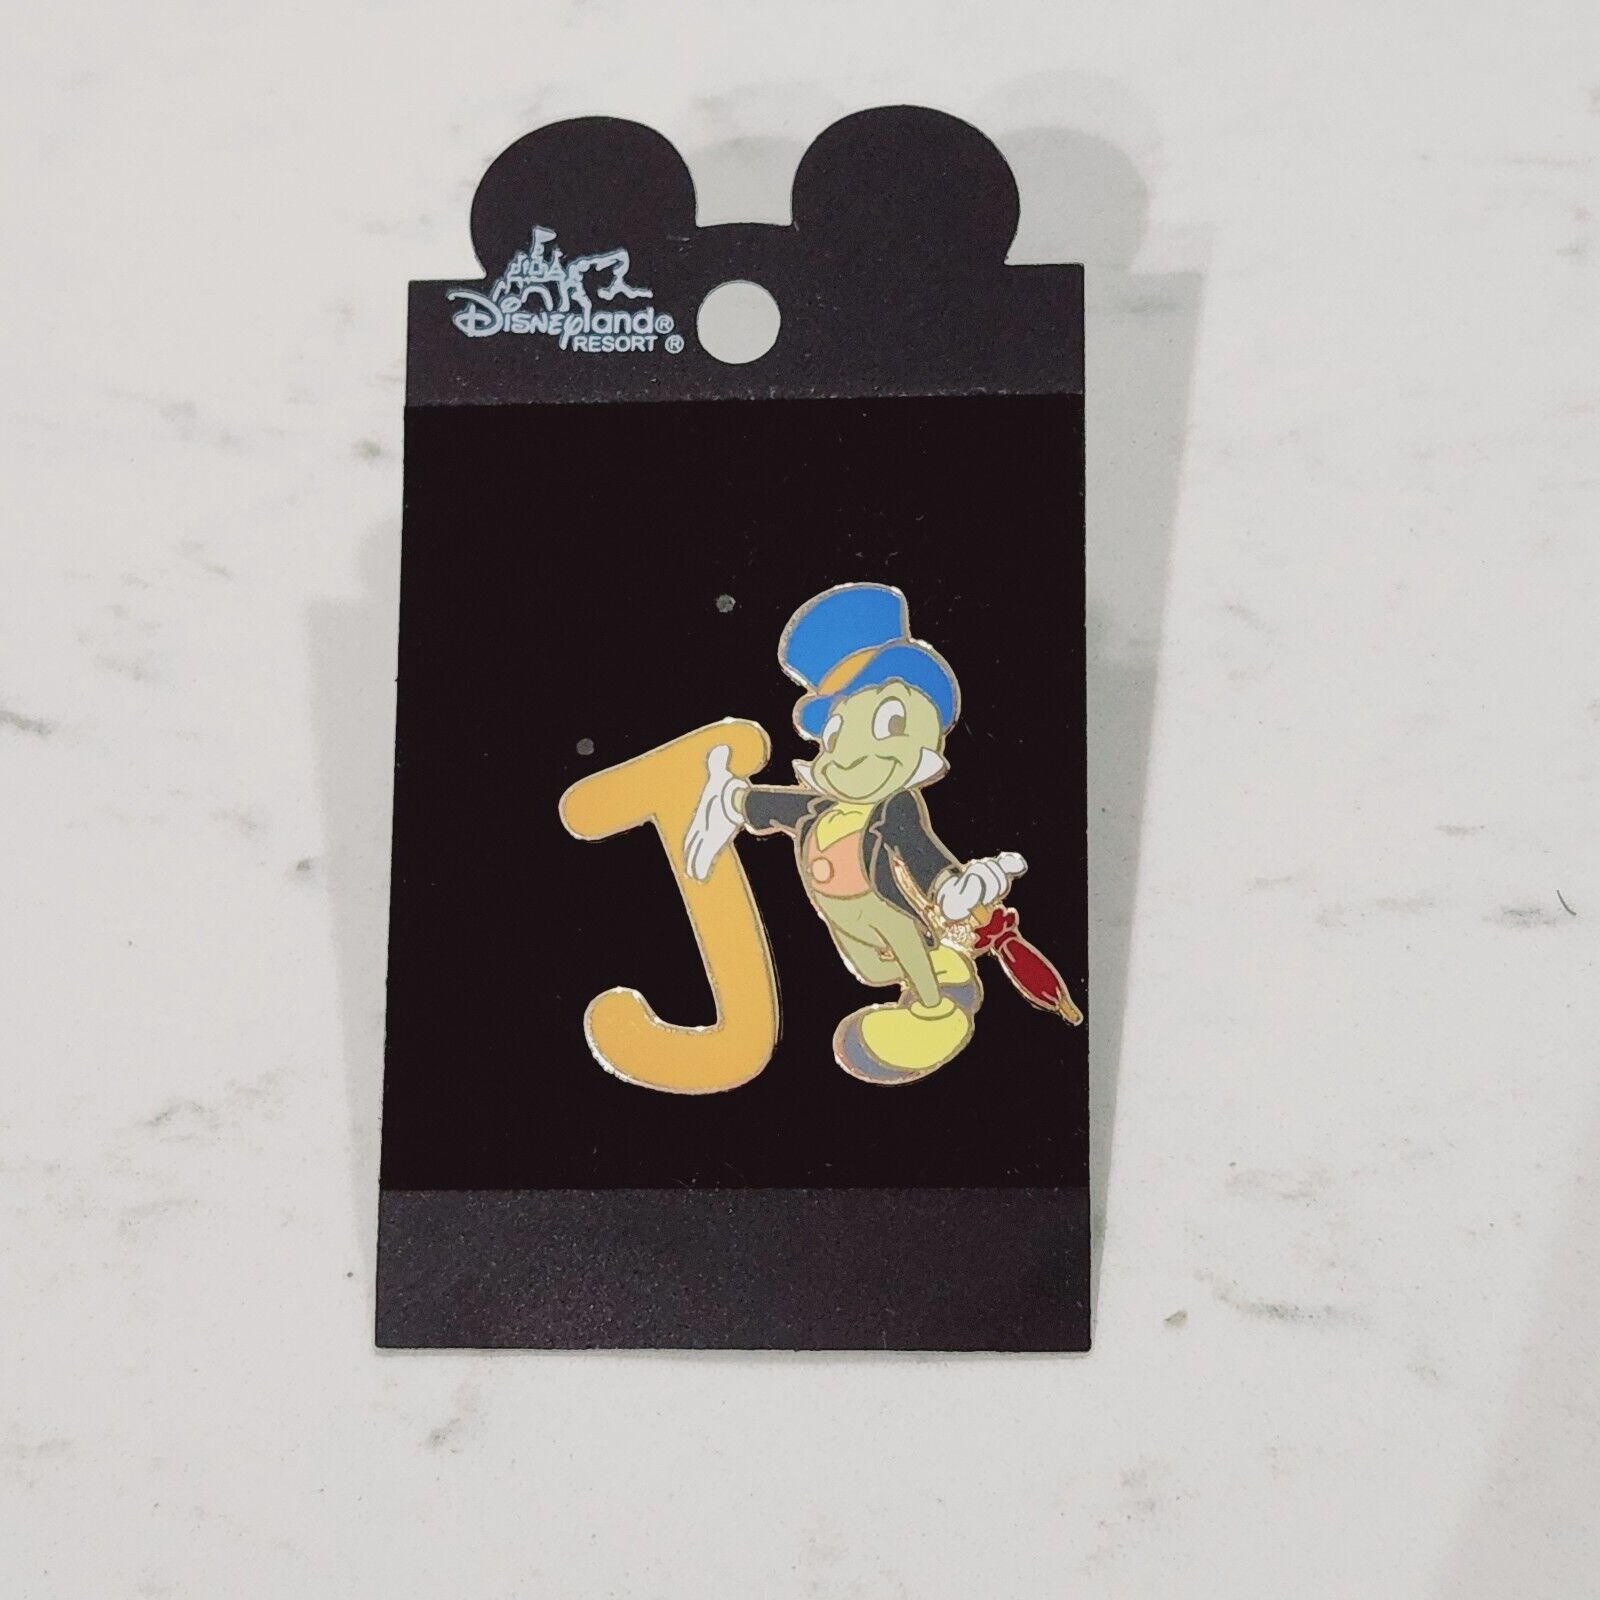 DIsney Pin Disneyland Alphabet Pin J - Jiminy Cricket from Pinocchio Pin 7806